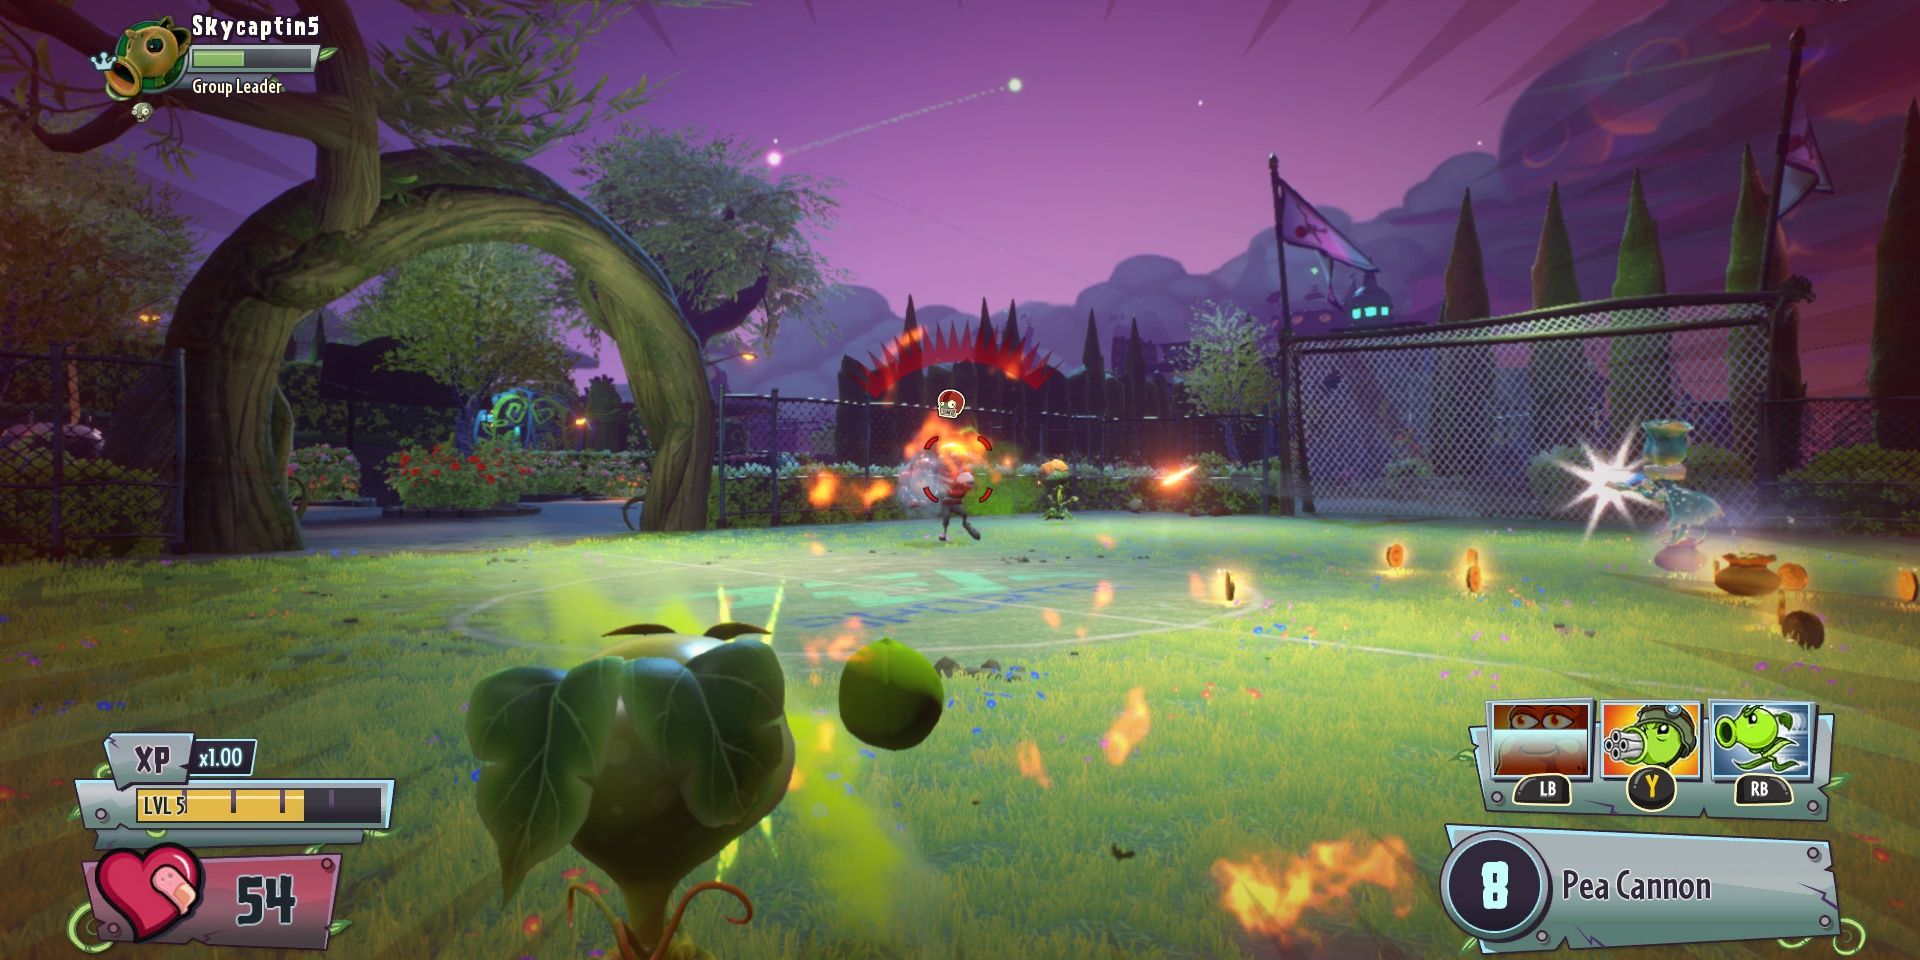 A screenshot showing gameplay in Plants vs. Zombies: Garden Warfare 2